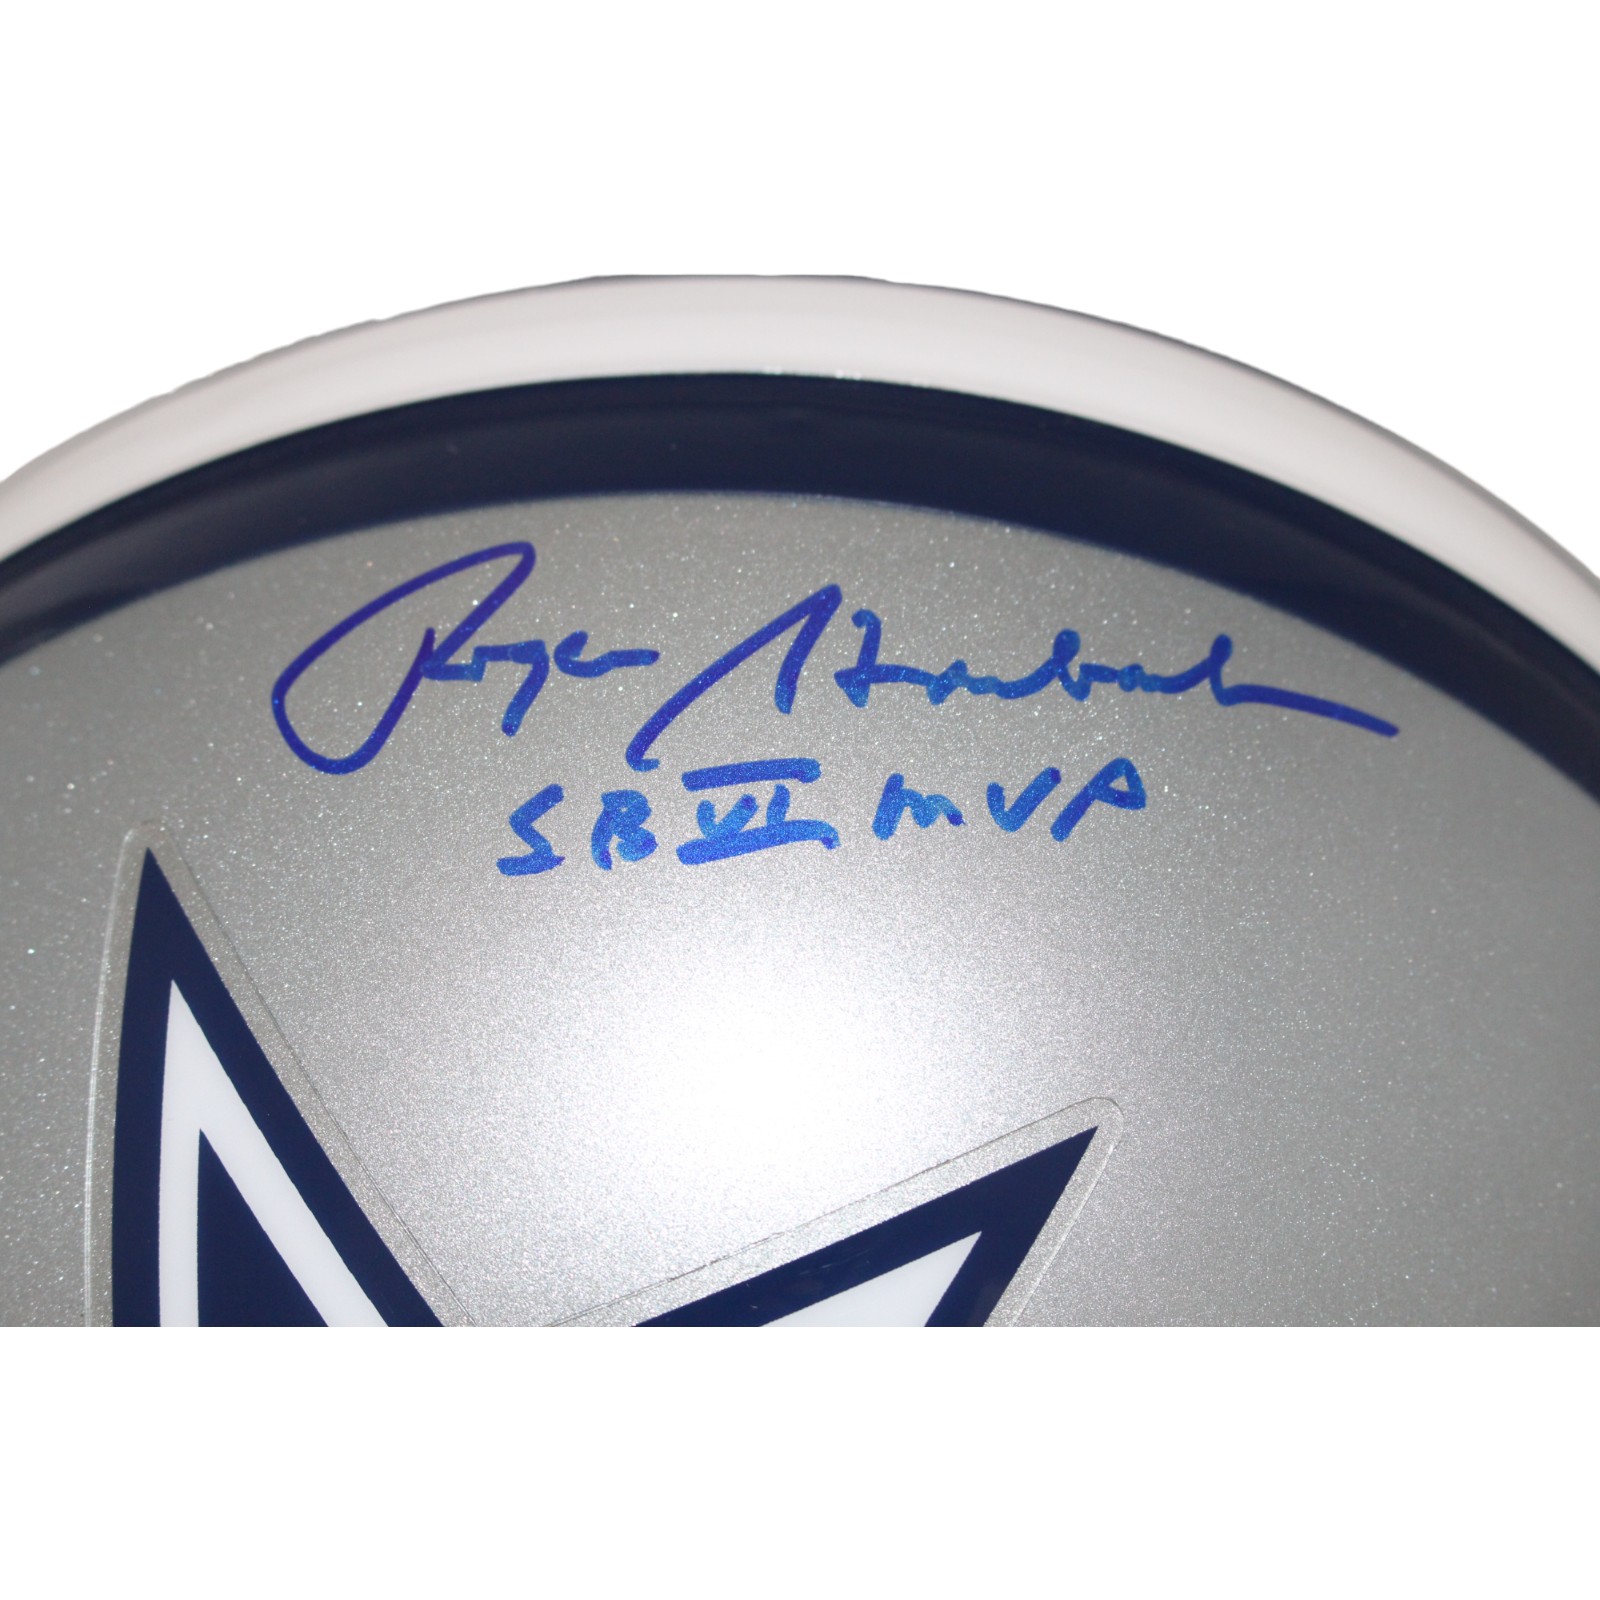 Roger Staubach Signed Dallas Cowboys Authentic VSR4 Helmet SB MVP BAS